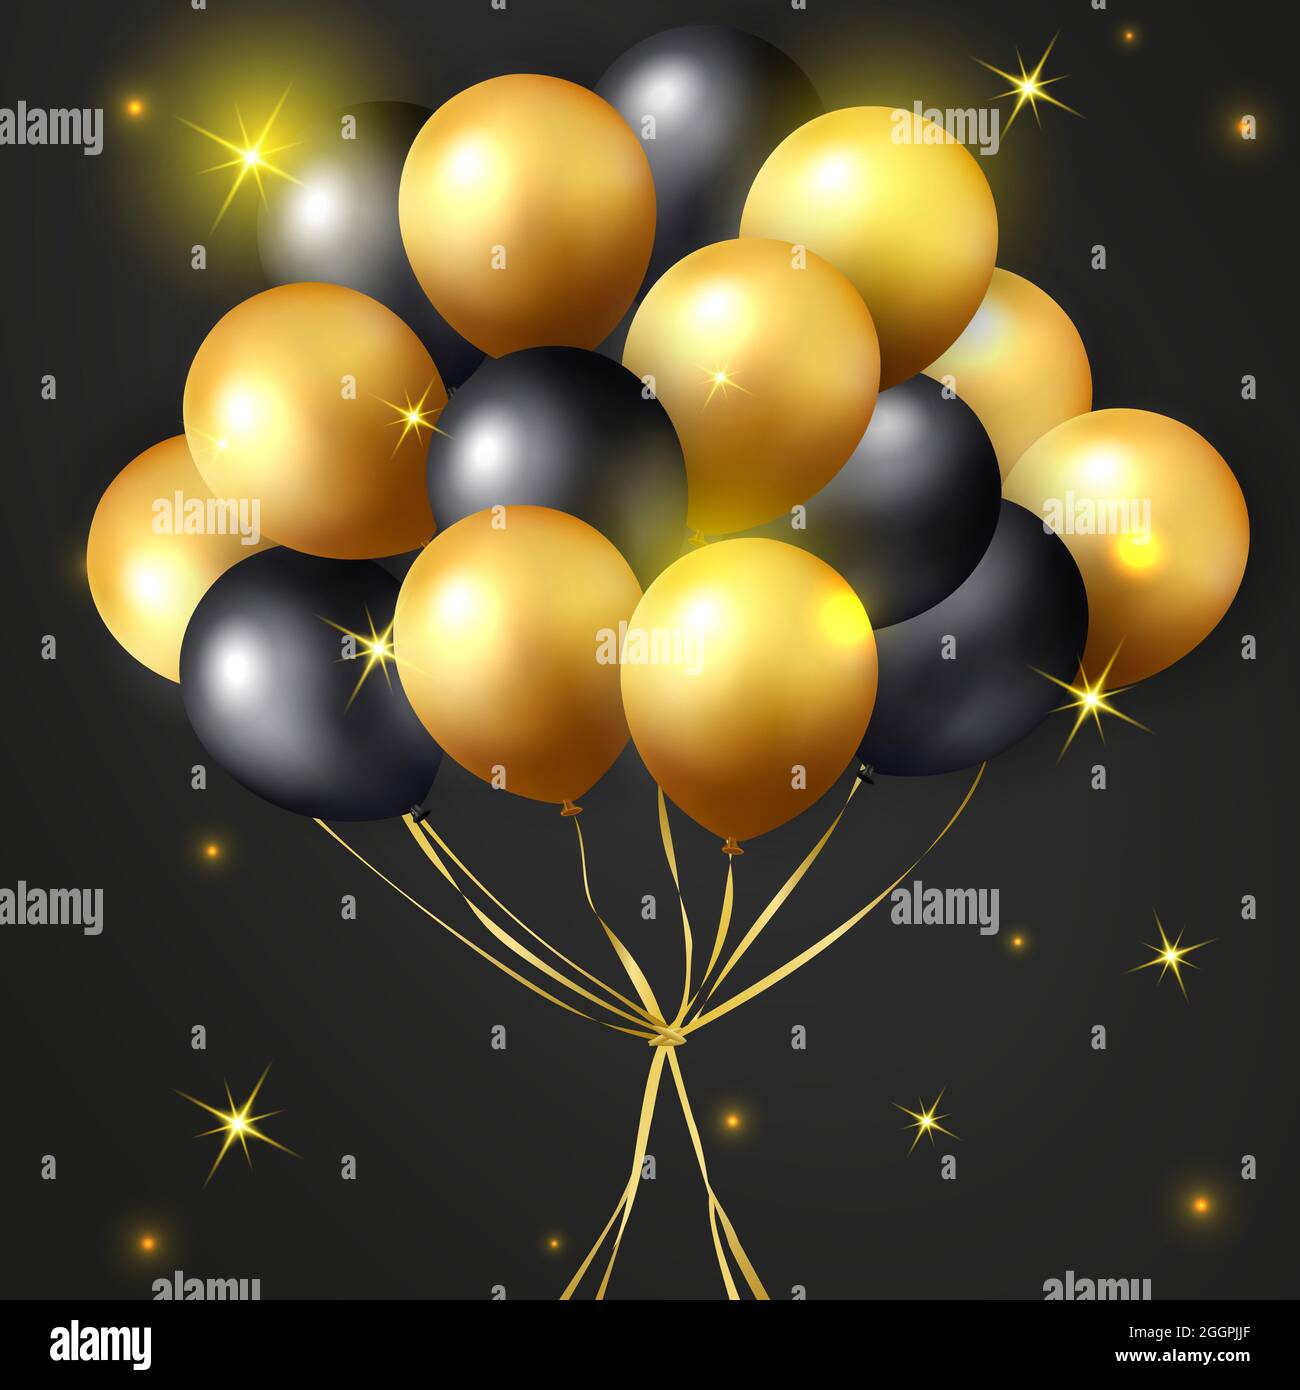 Elegant golden yellow black ballon Happy Birthday celebration card banner  template background Stock Photo - Alamy